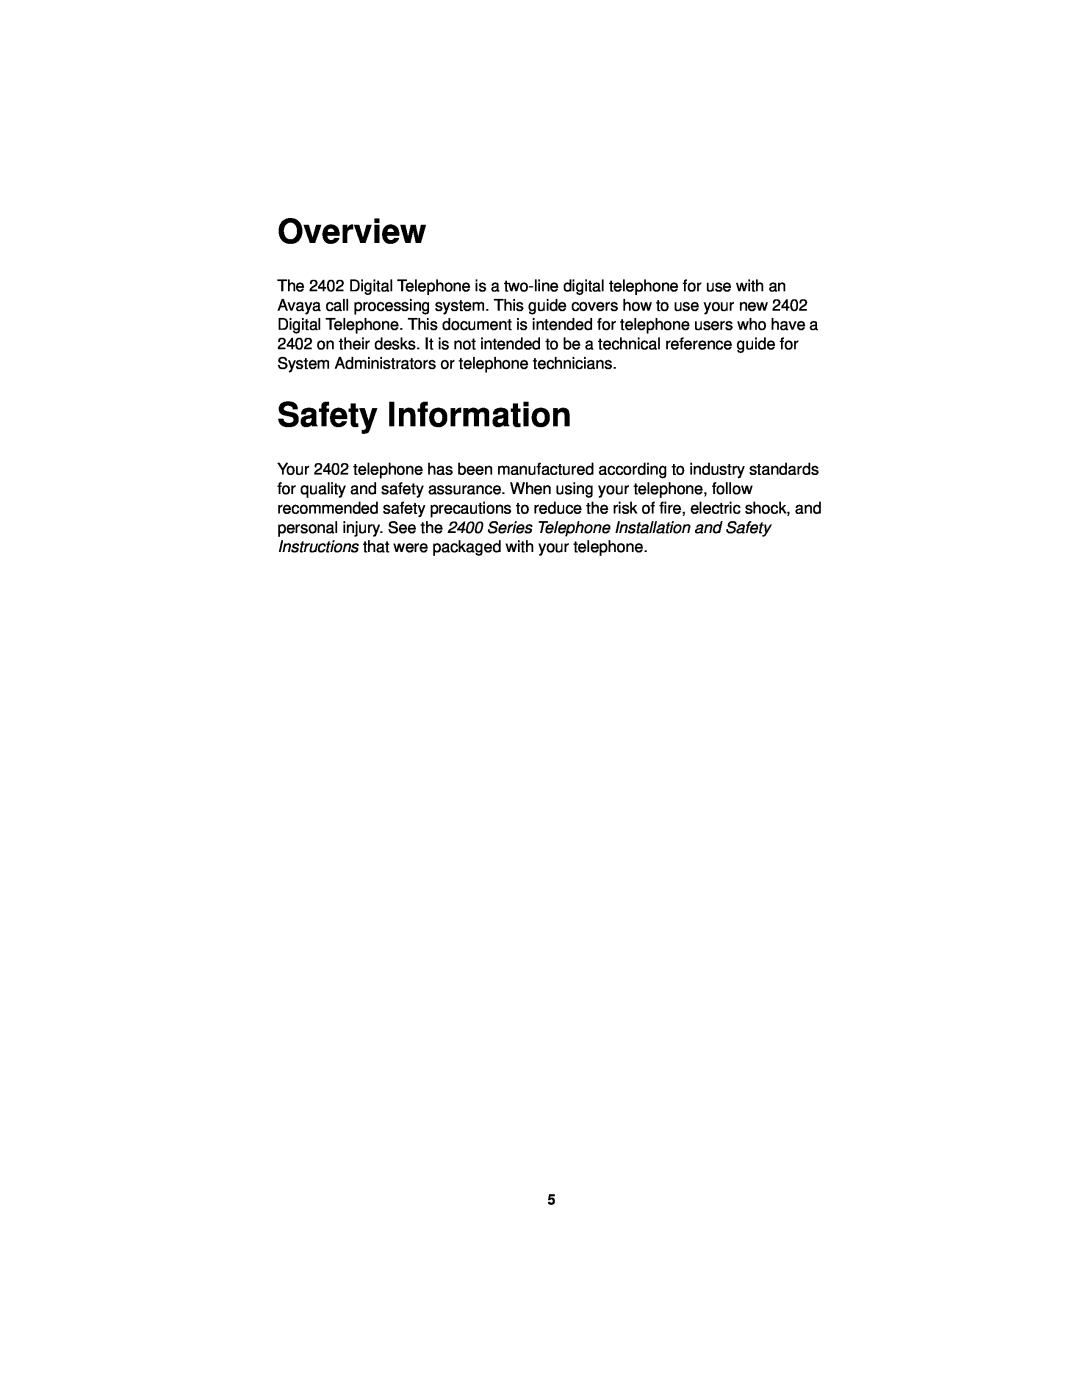 Avaya 2402 manual Overview, Safety Information 